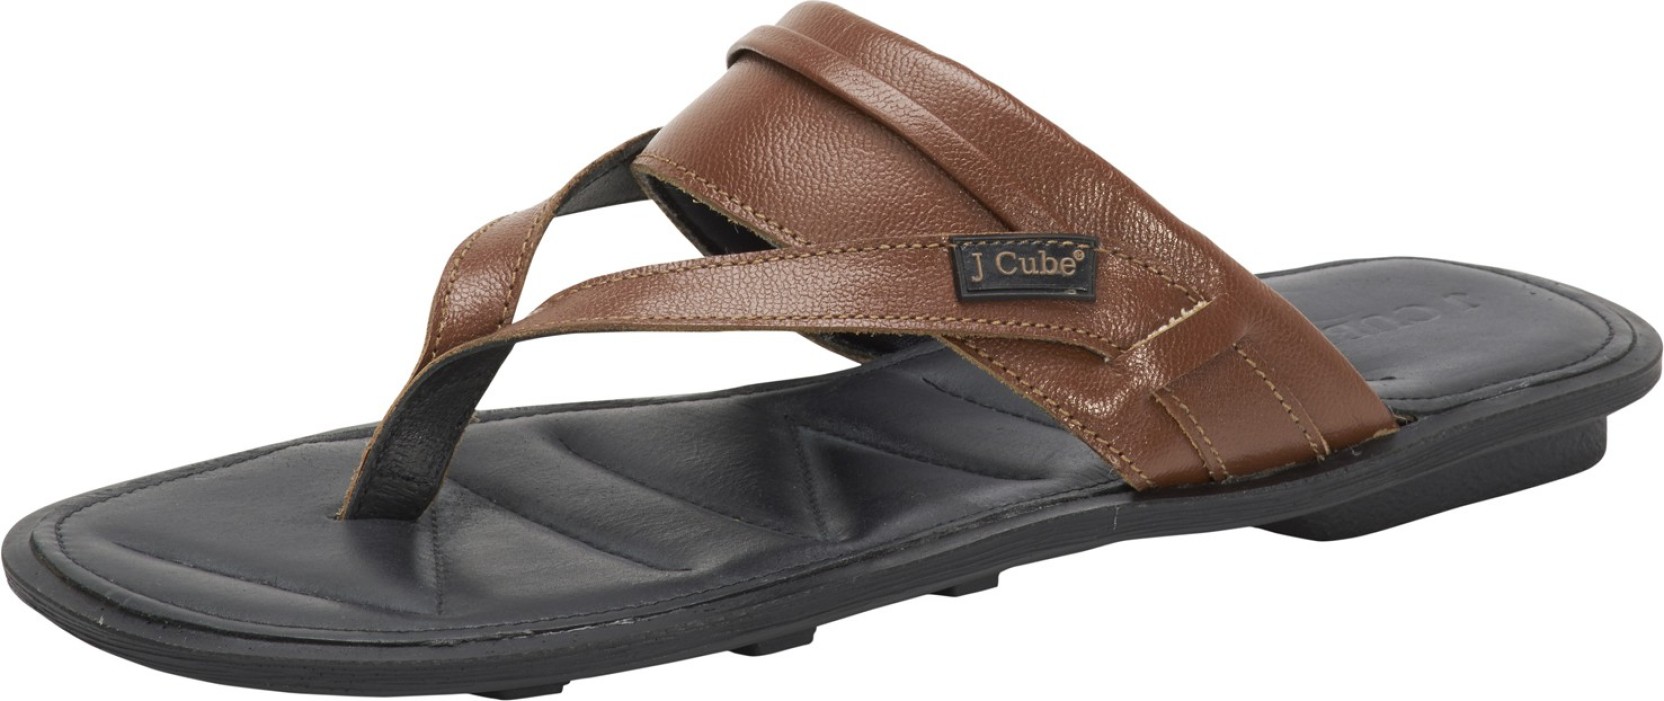 JCube Men TAN Sandals - Buy TAN Color JCube Men TAN Sandals Online at ...